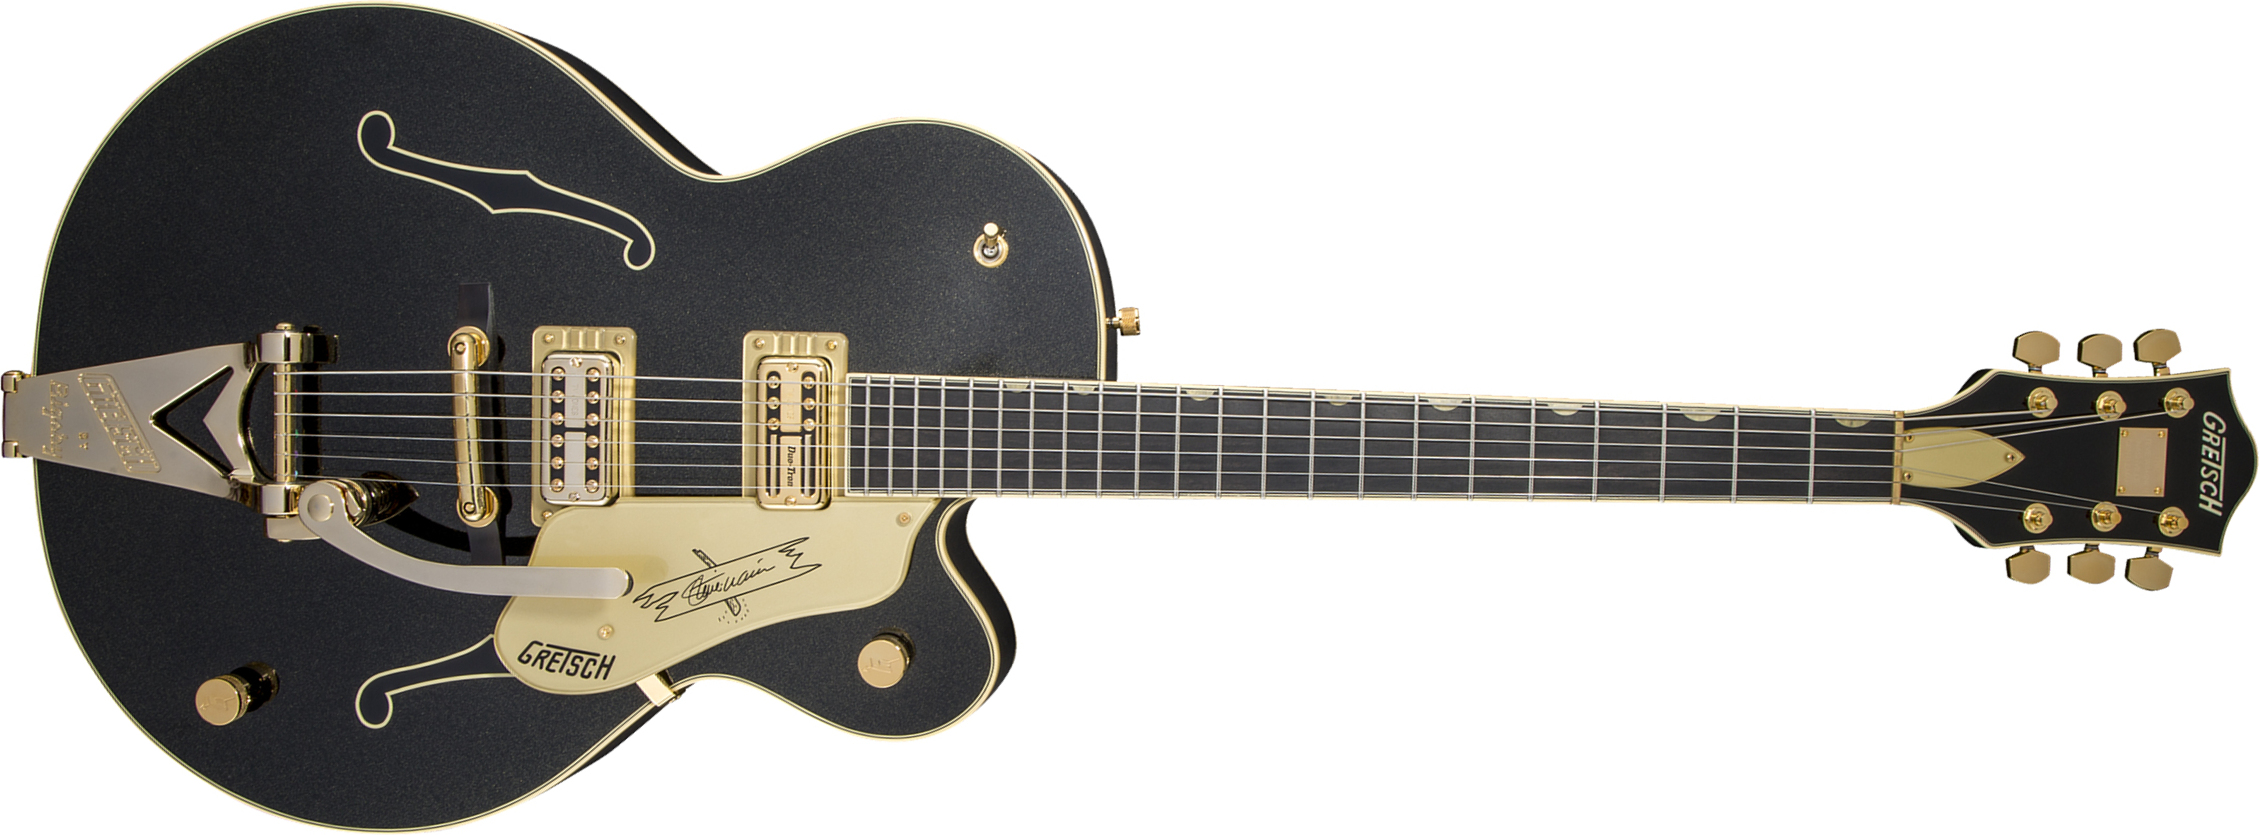 Gretsch Steve Wariner G6120t-sw Nashville Japon Signature Hh Bigsby Eb - Magic Black - Semi hollow elektriche gitaar - Main picture